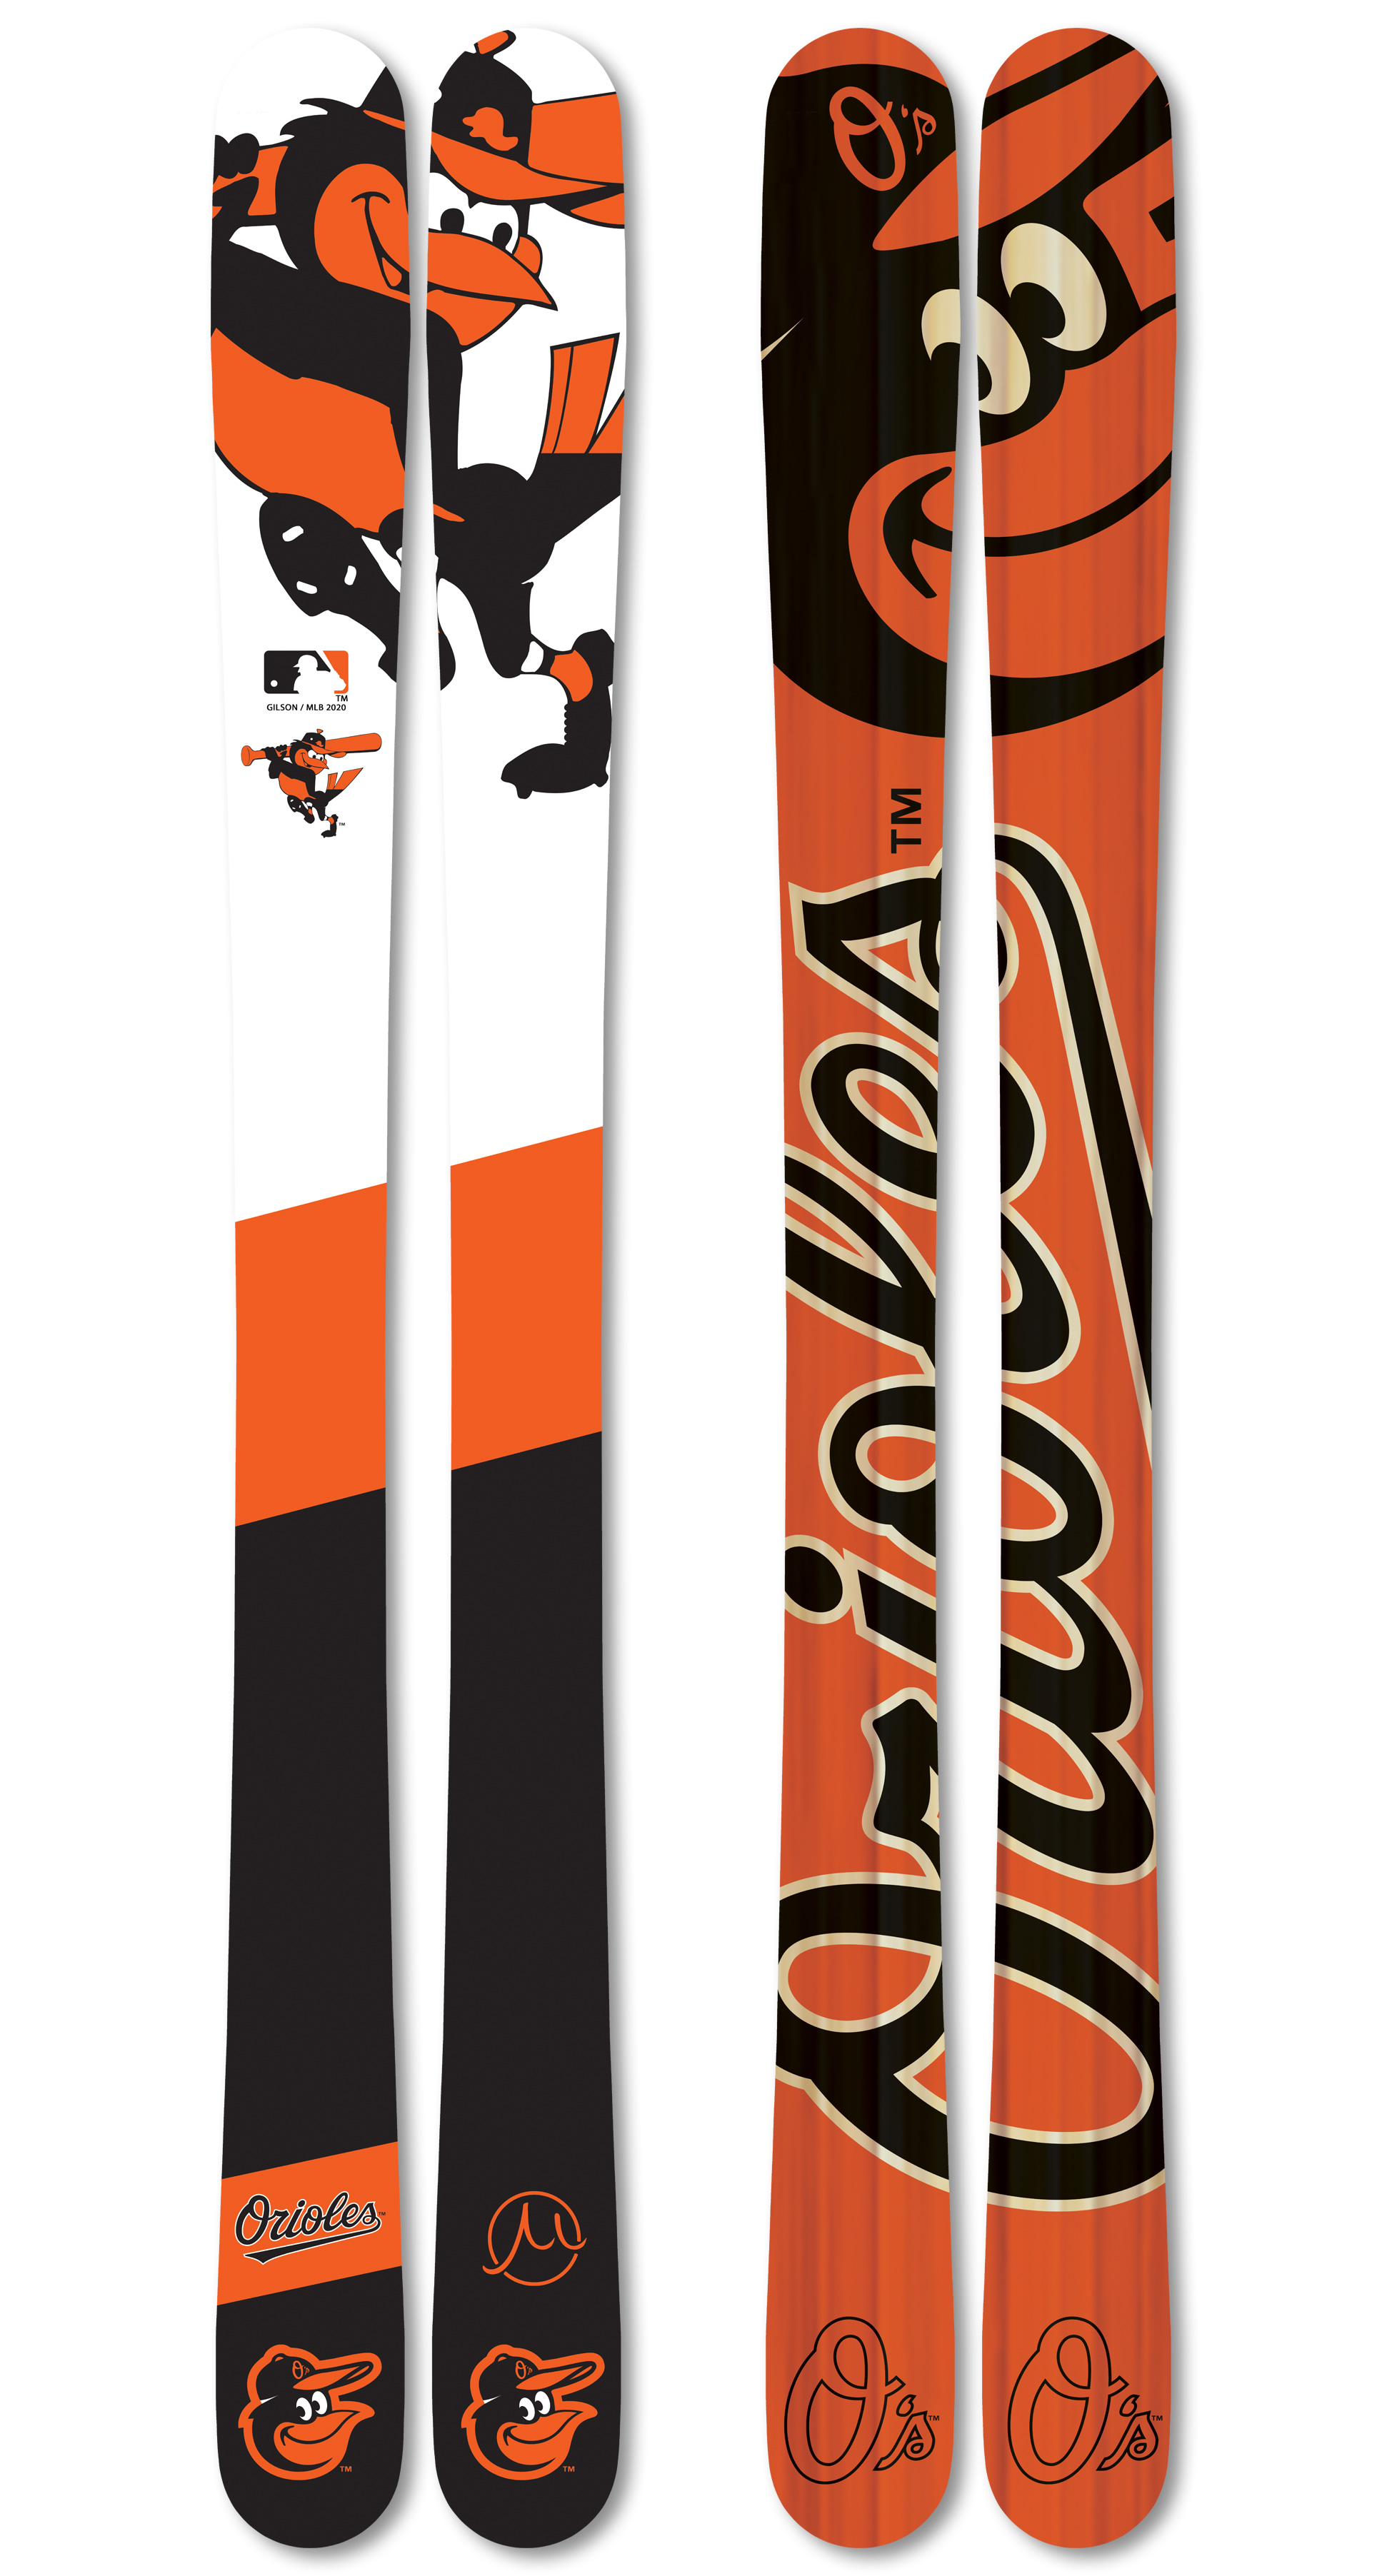 Mlb baltimore orioles skis large